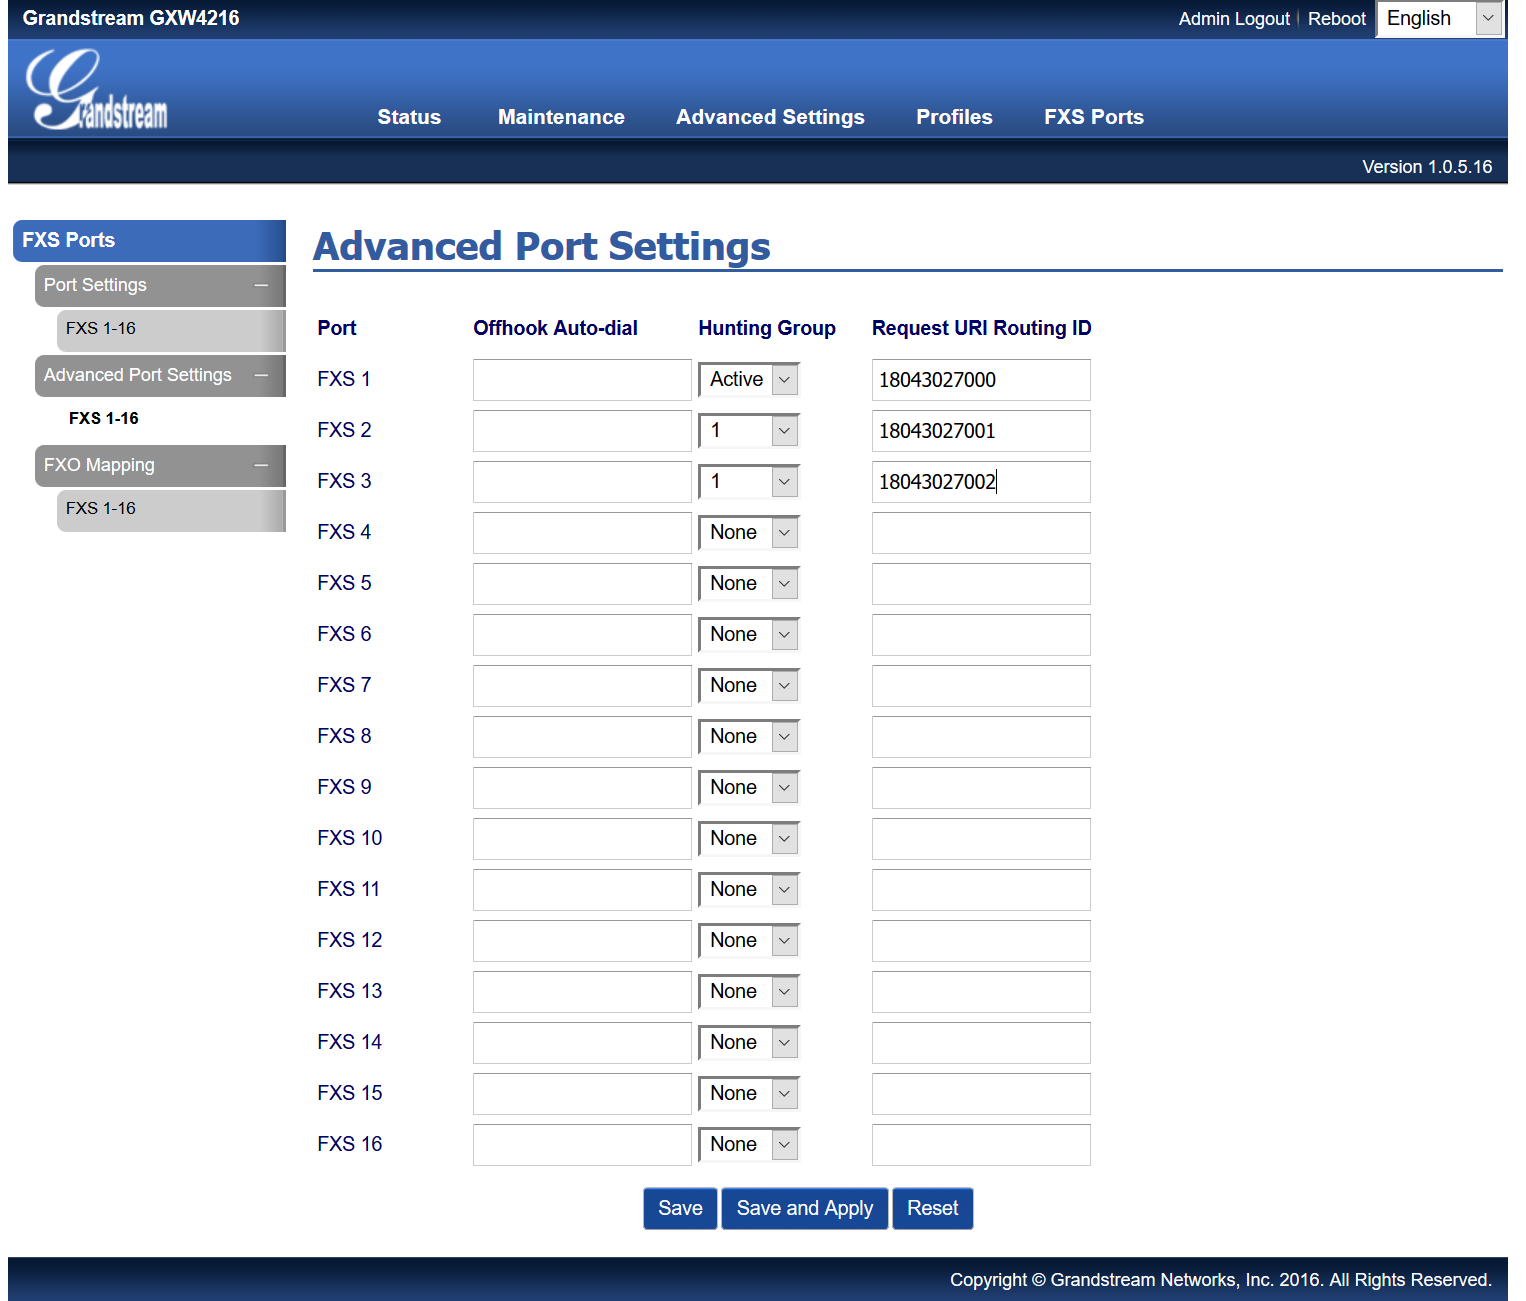 Grandstream GXW4200 - FXS Ports - Advanced Port Settings